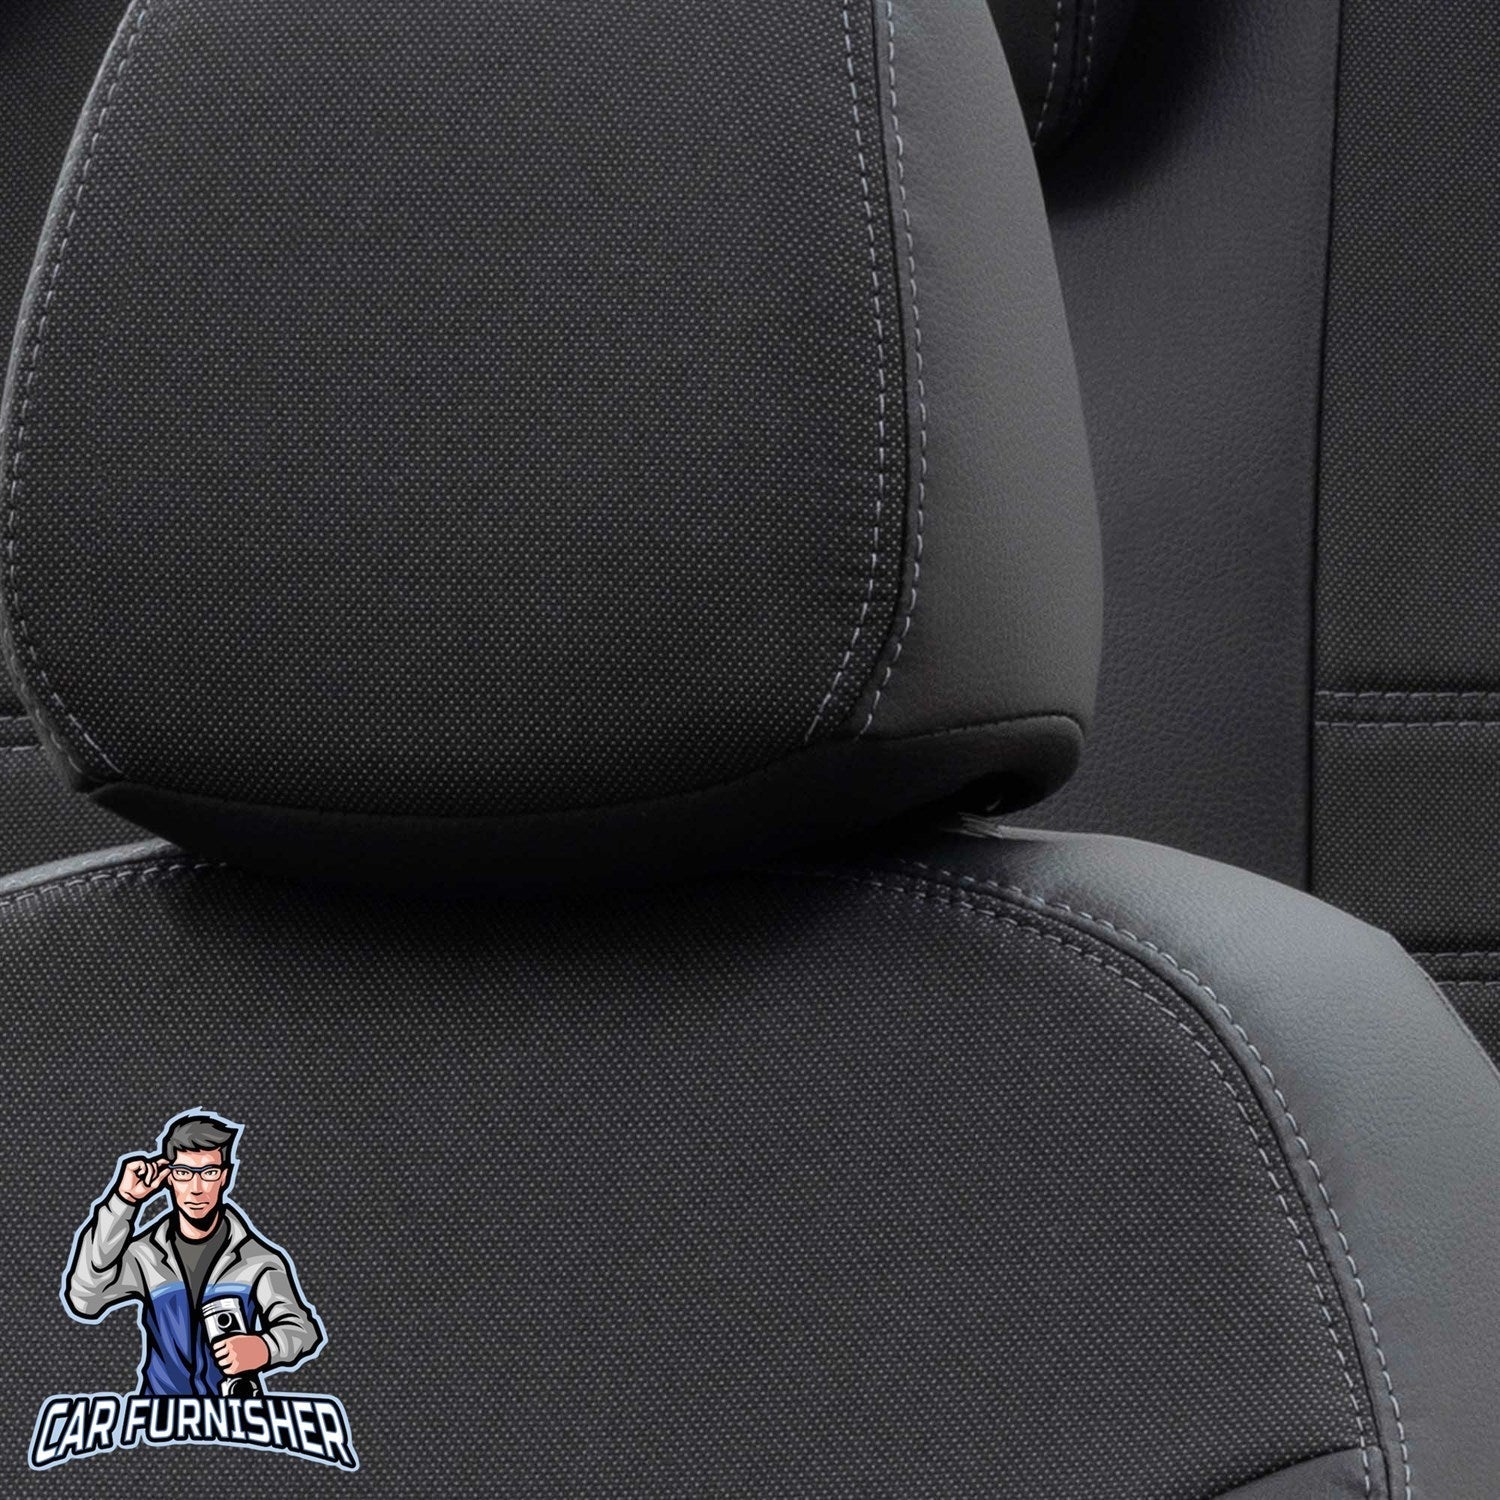 Hyundai Bayon Seat Covers Paris Leather & Jacquard Design Black Leather & Jacquard Fabric